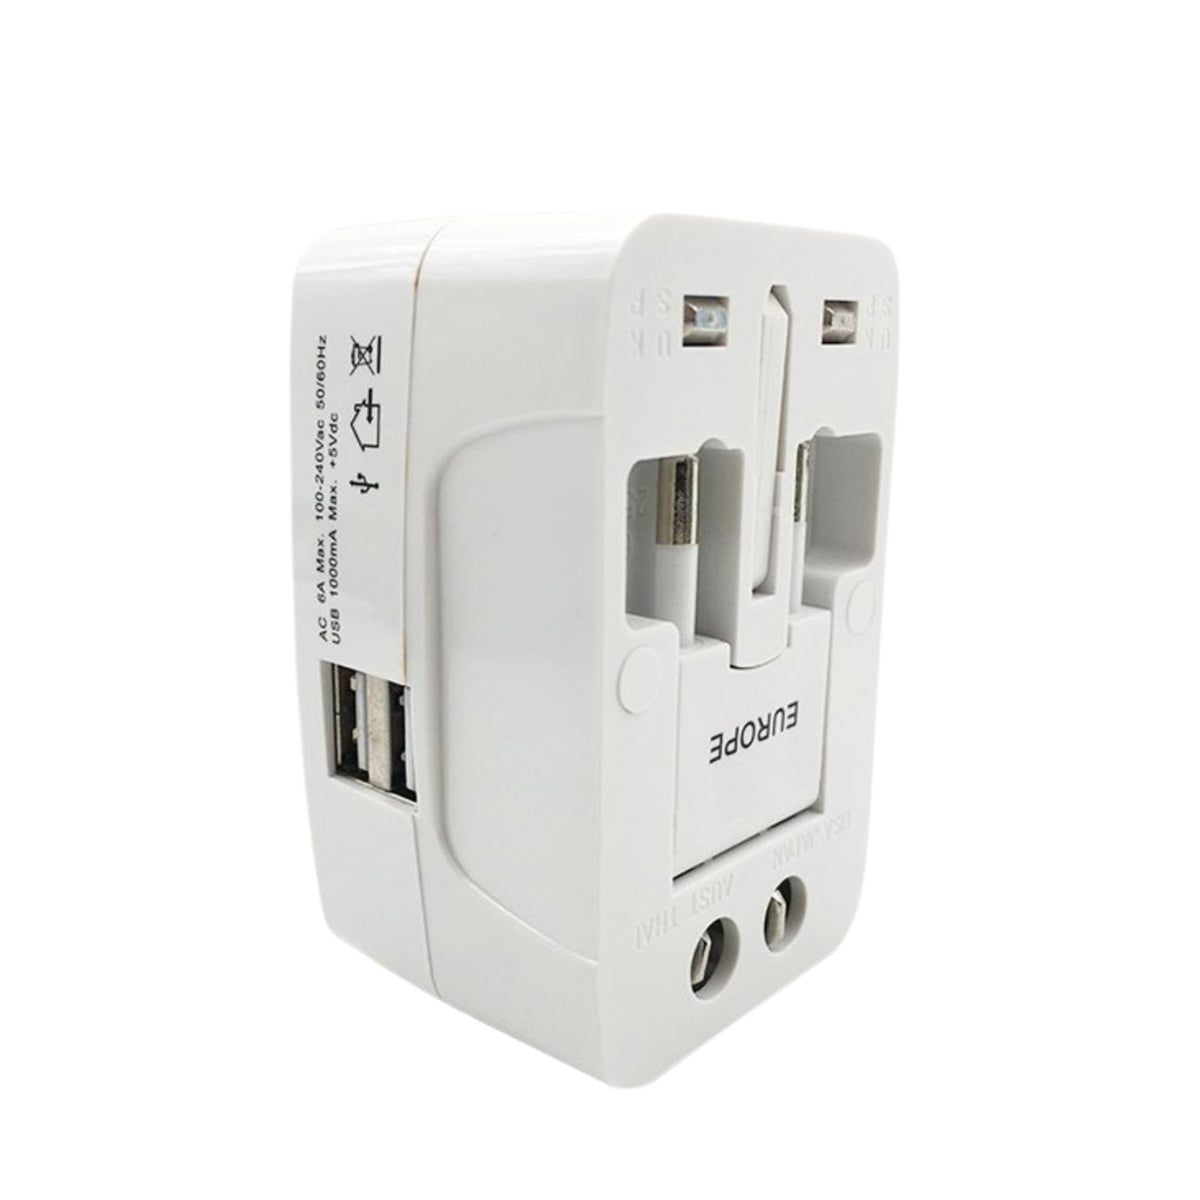 12671 All-in-One Universal Worldwide Travelling AC Adaptor Plug (AU / UK / US / EU) International Power Charger Electric USB Power Plug Socket Adapter Converter (1 Pc)